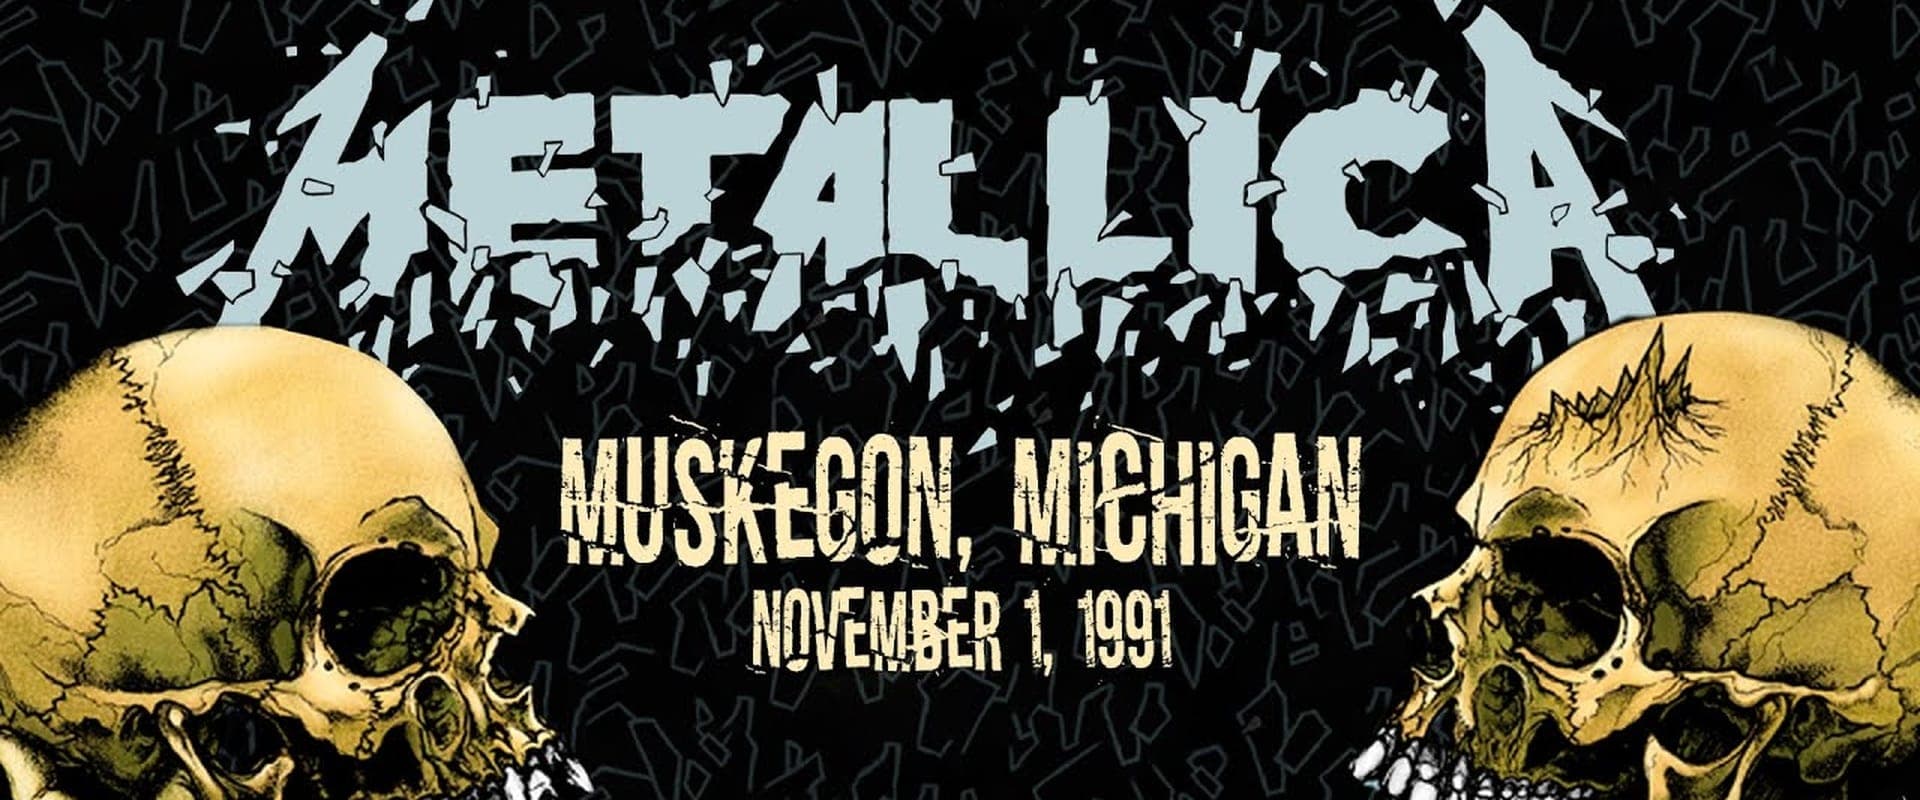 Metallica: Live in Muskegon, Michigan (November 1, 1991)